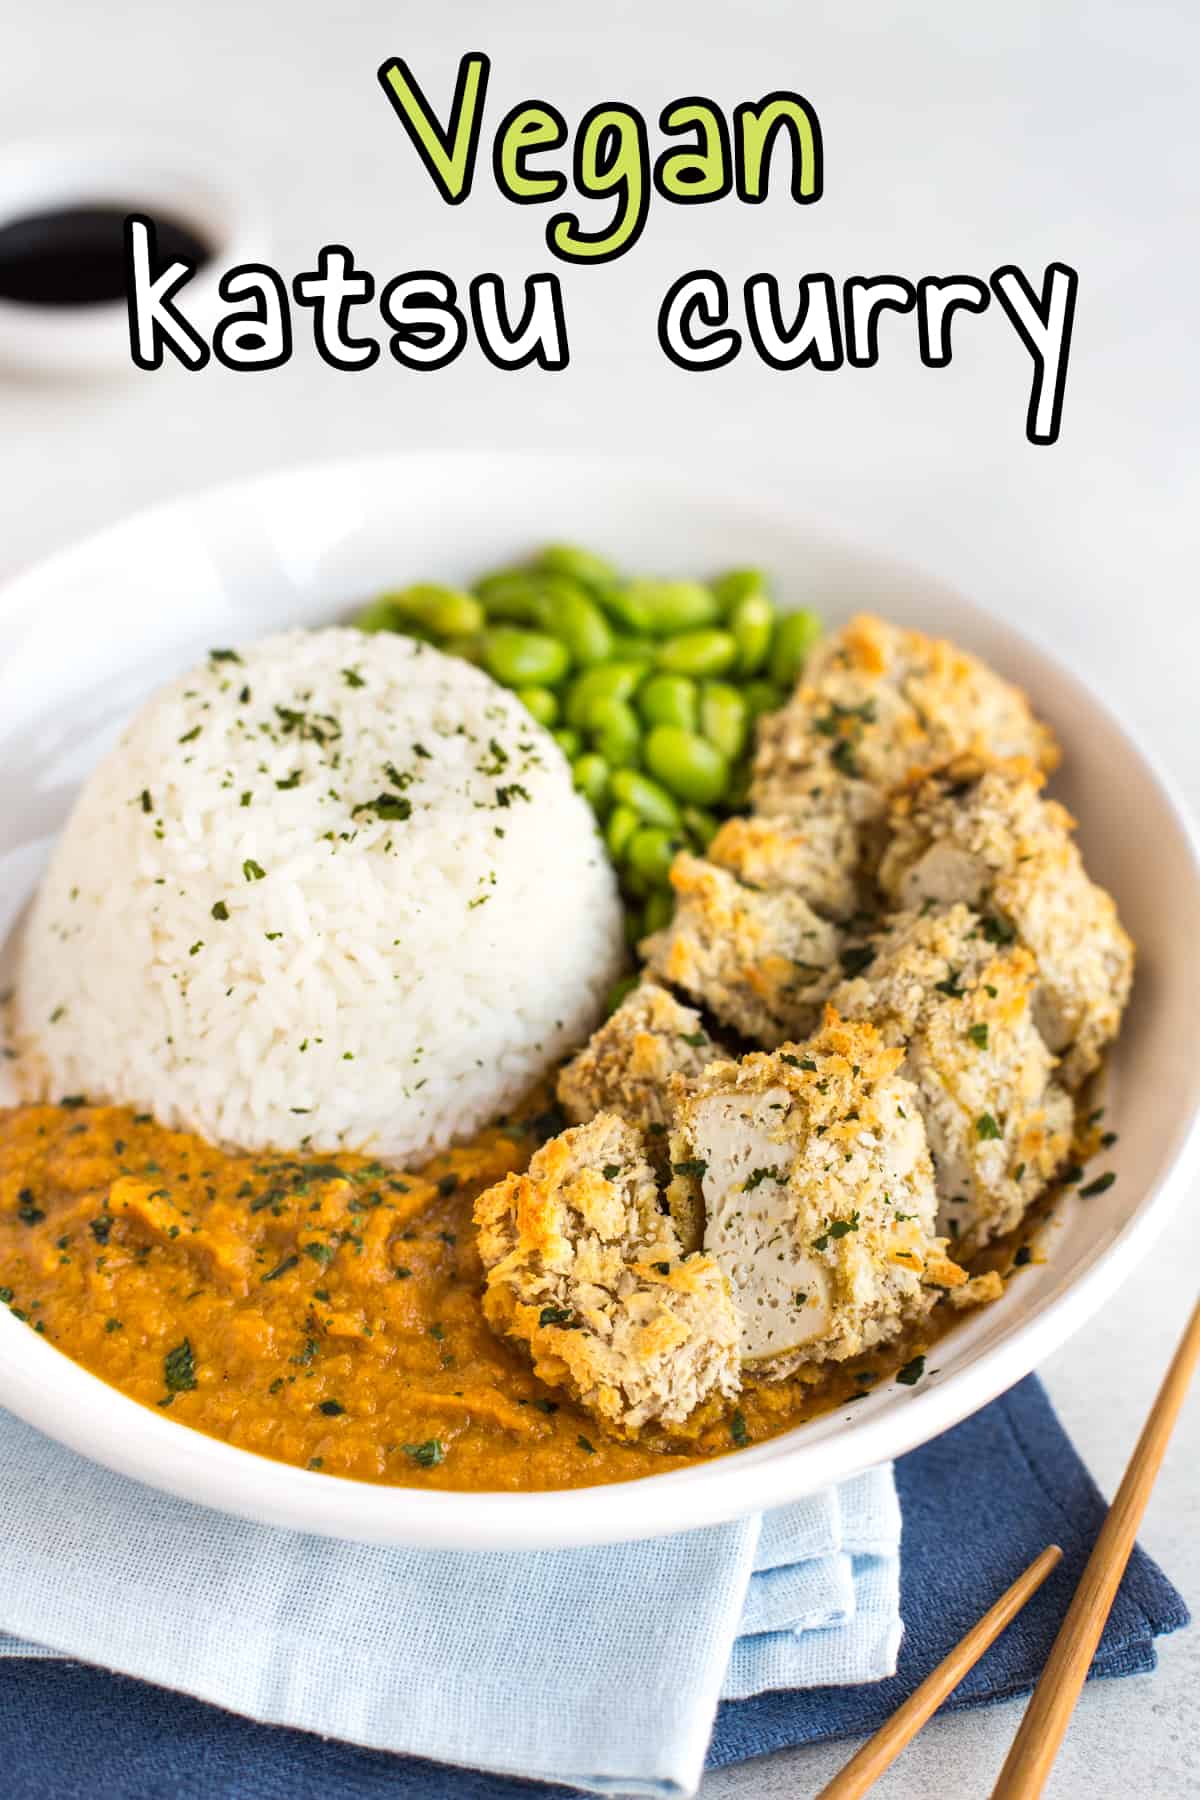 Vegan katsu curry with crispy breaded tofu and rice.